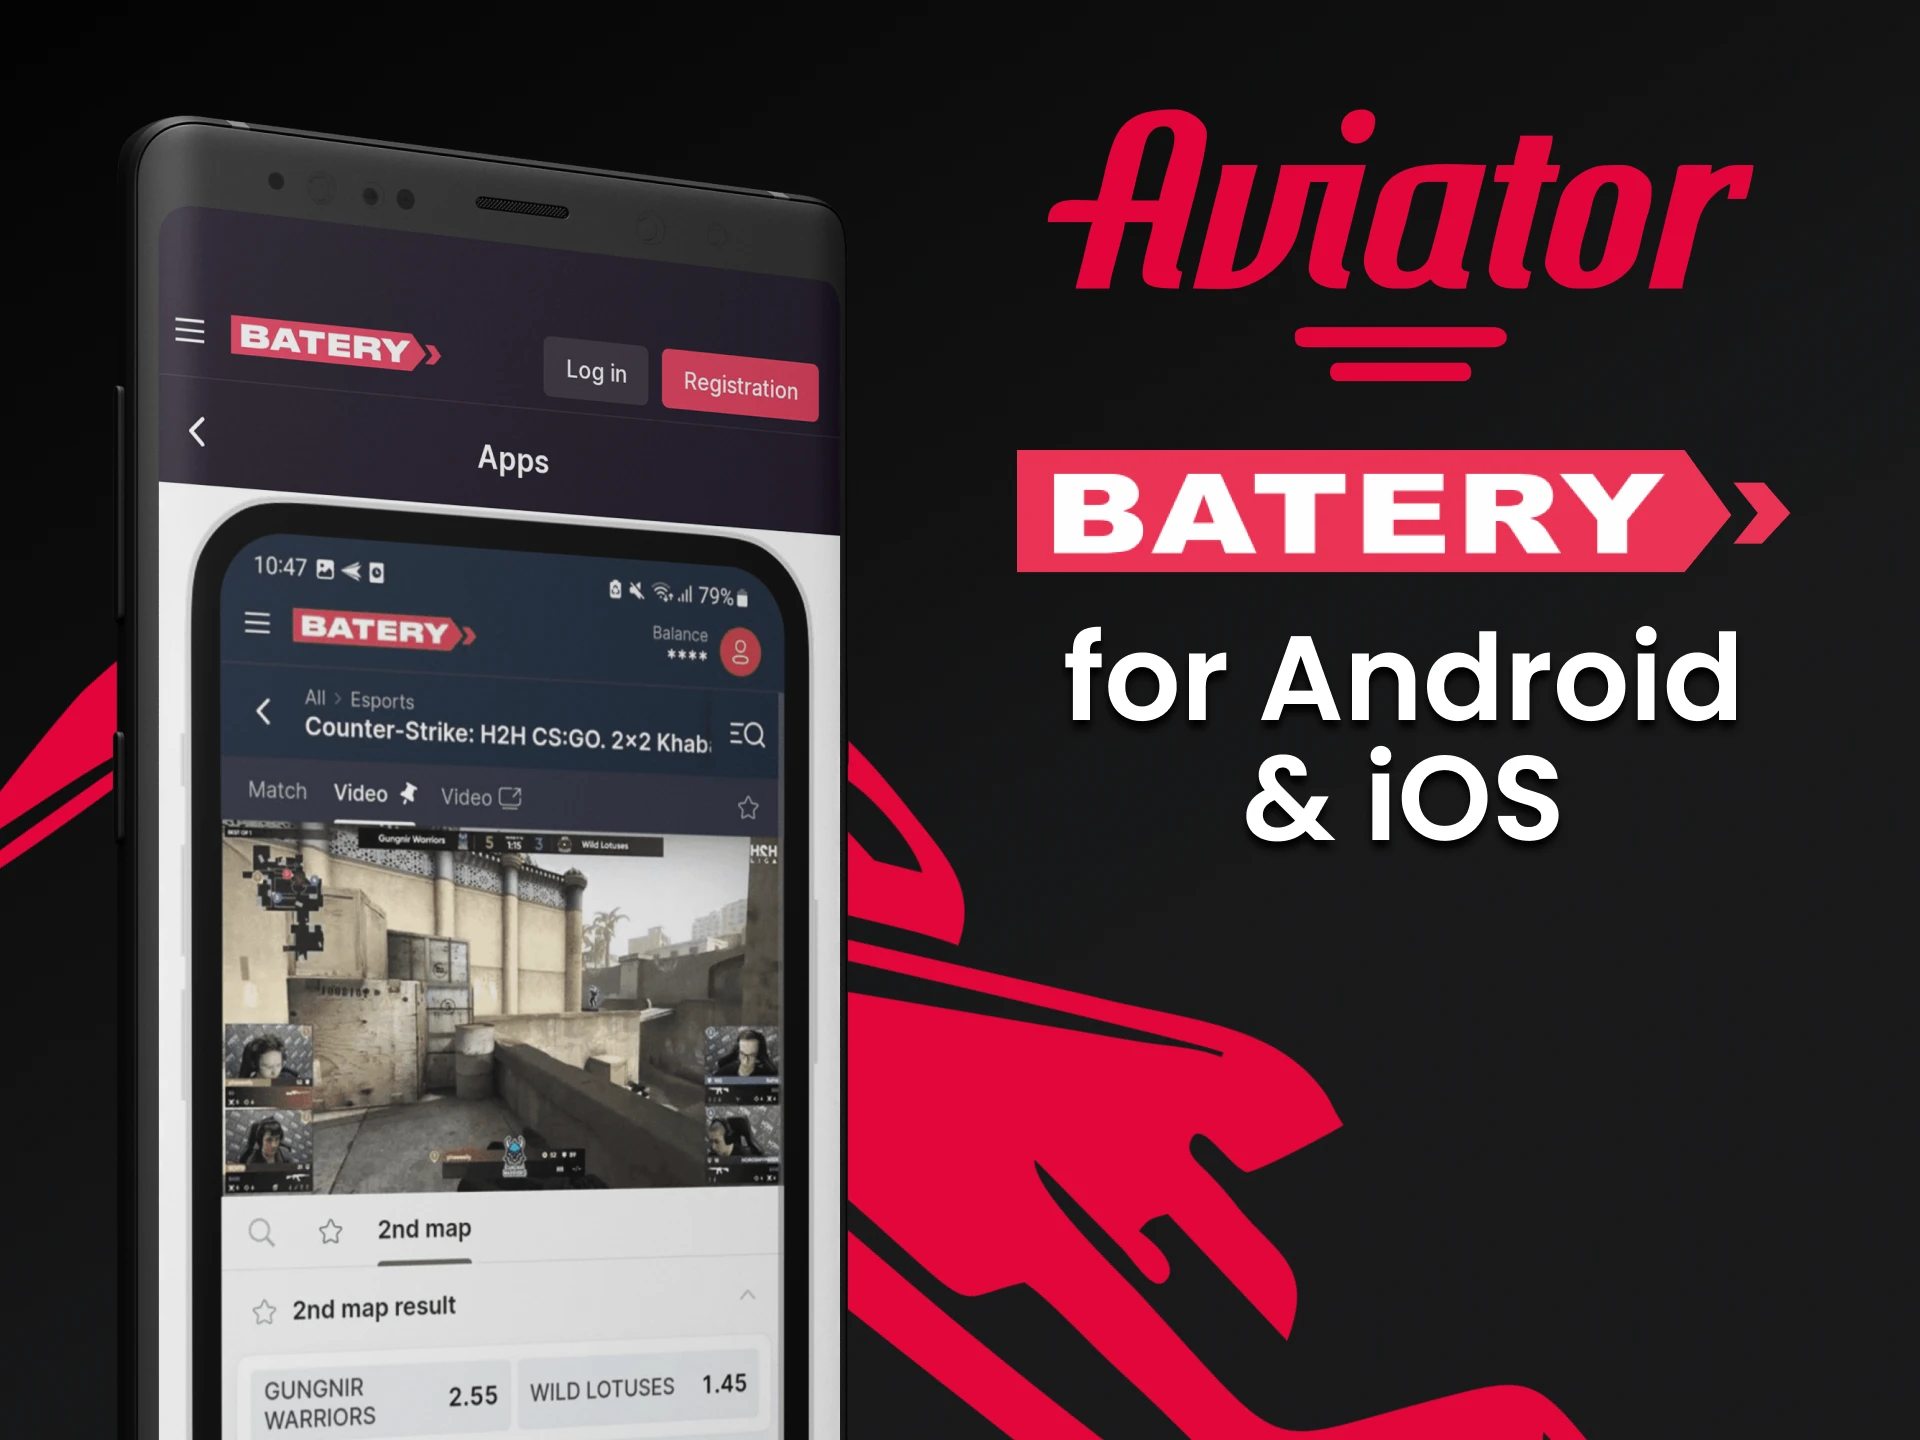 Play Aviator through the Batery app.